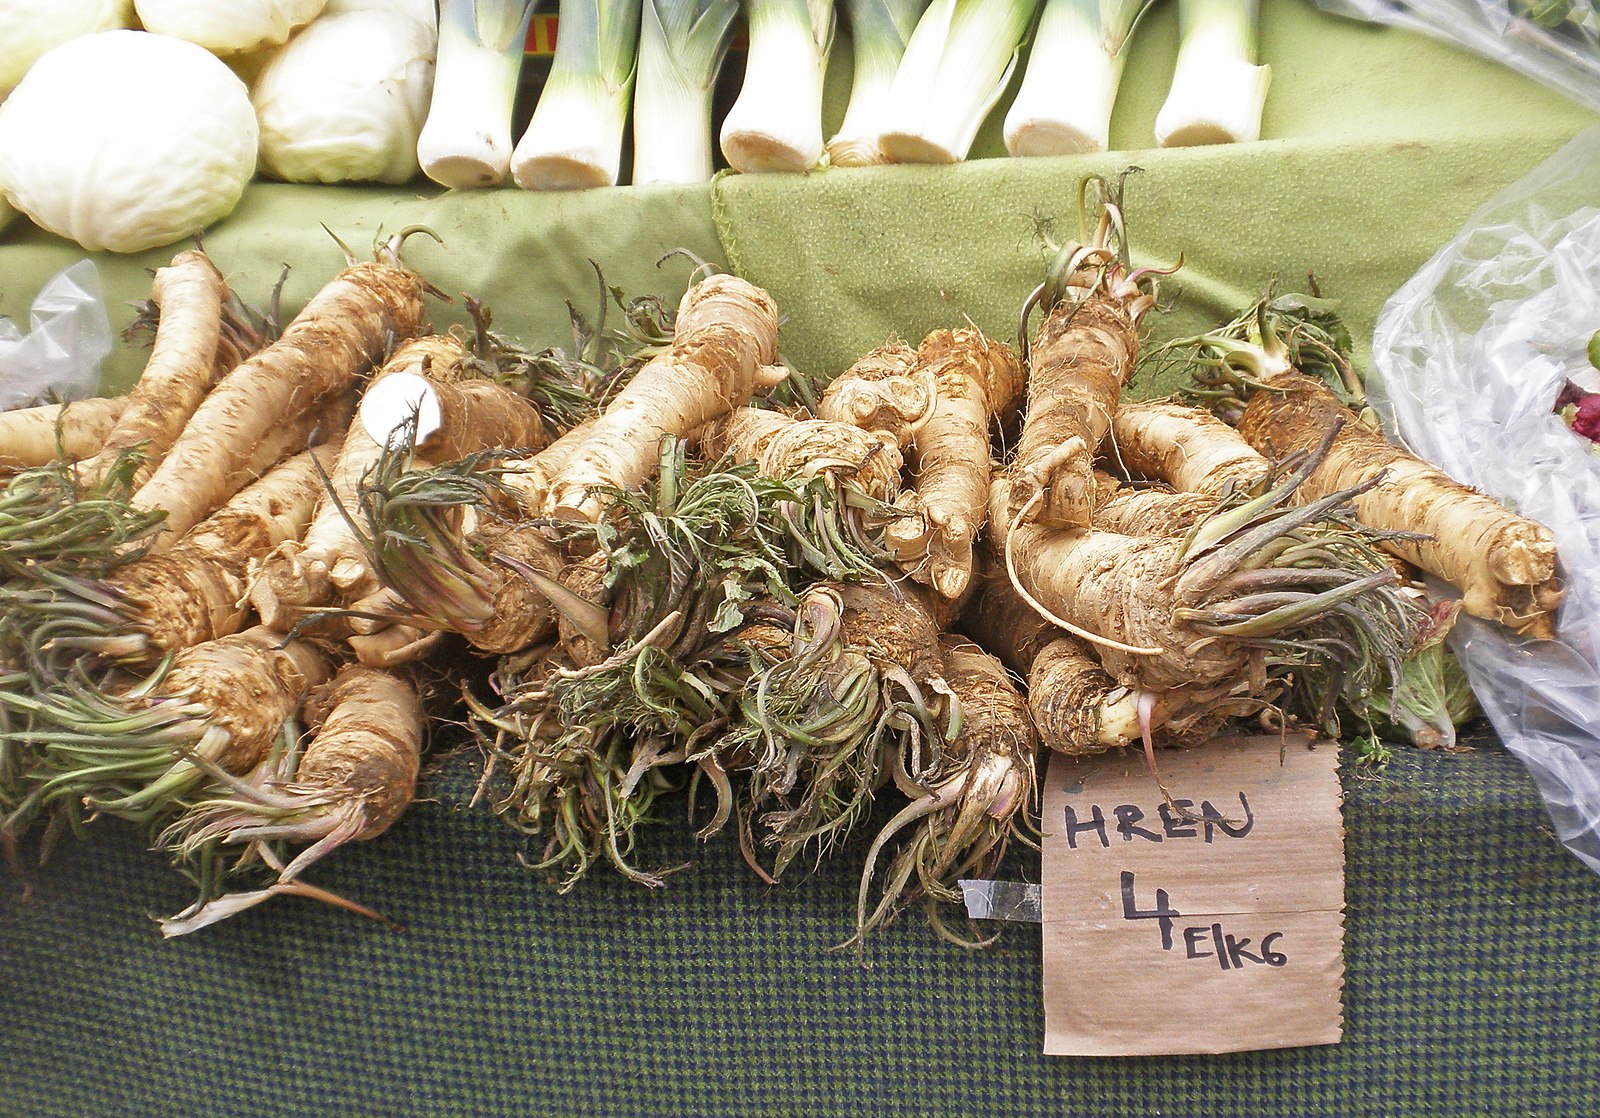 Horseradish from Croatian town gets European protection status 